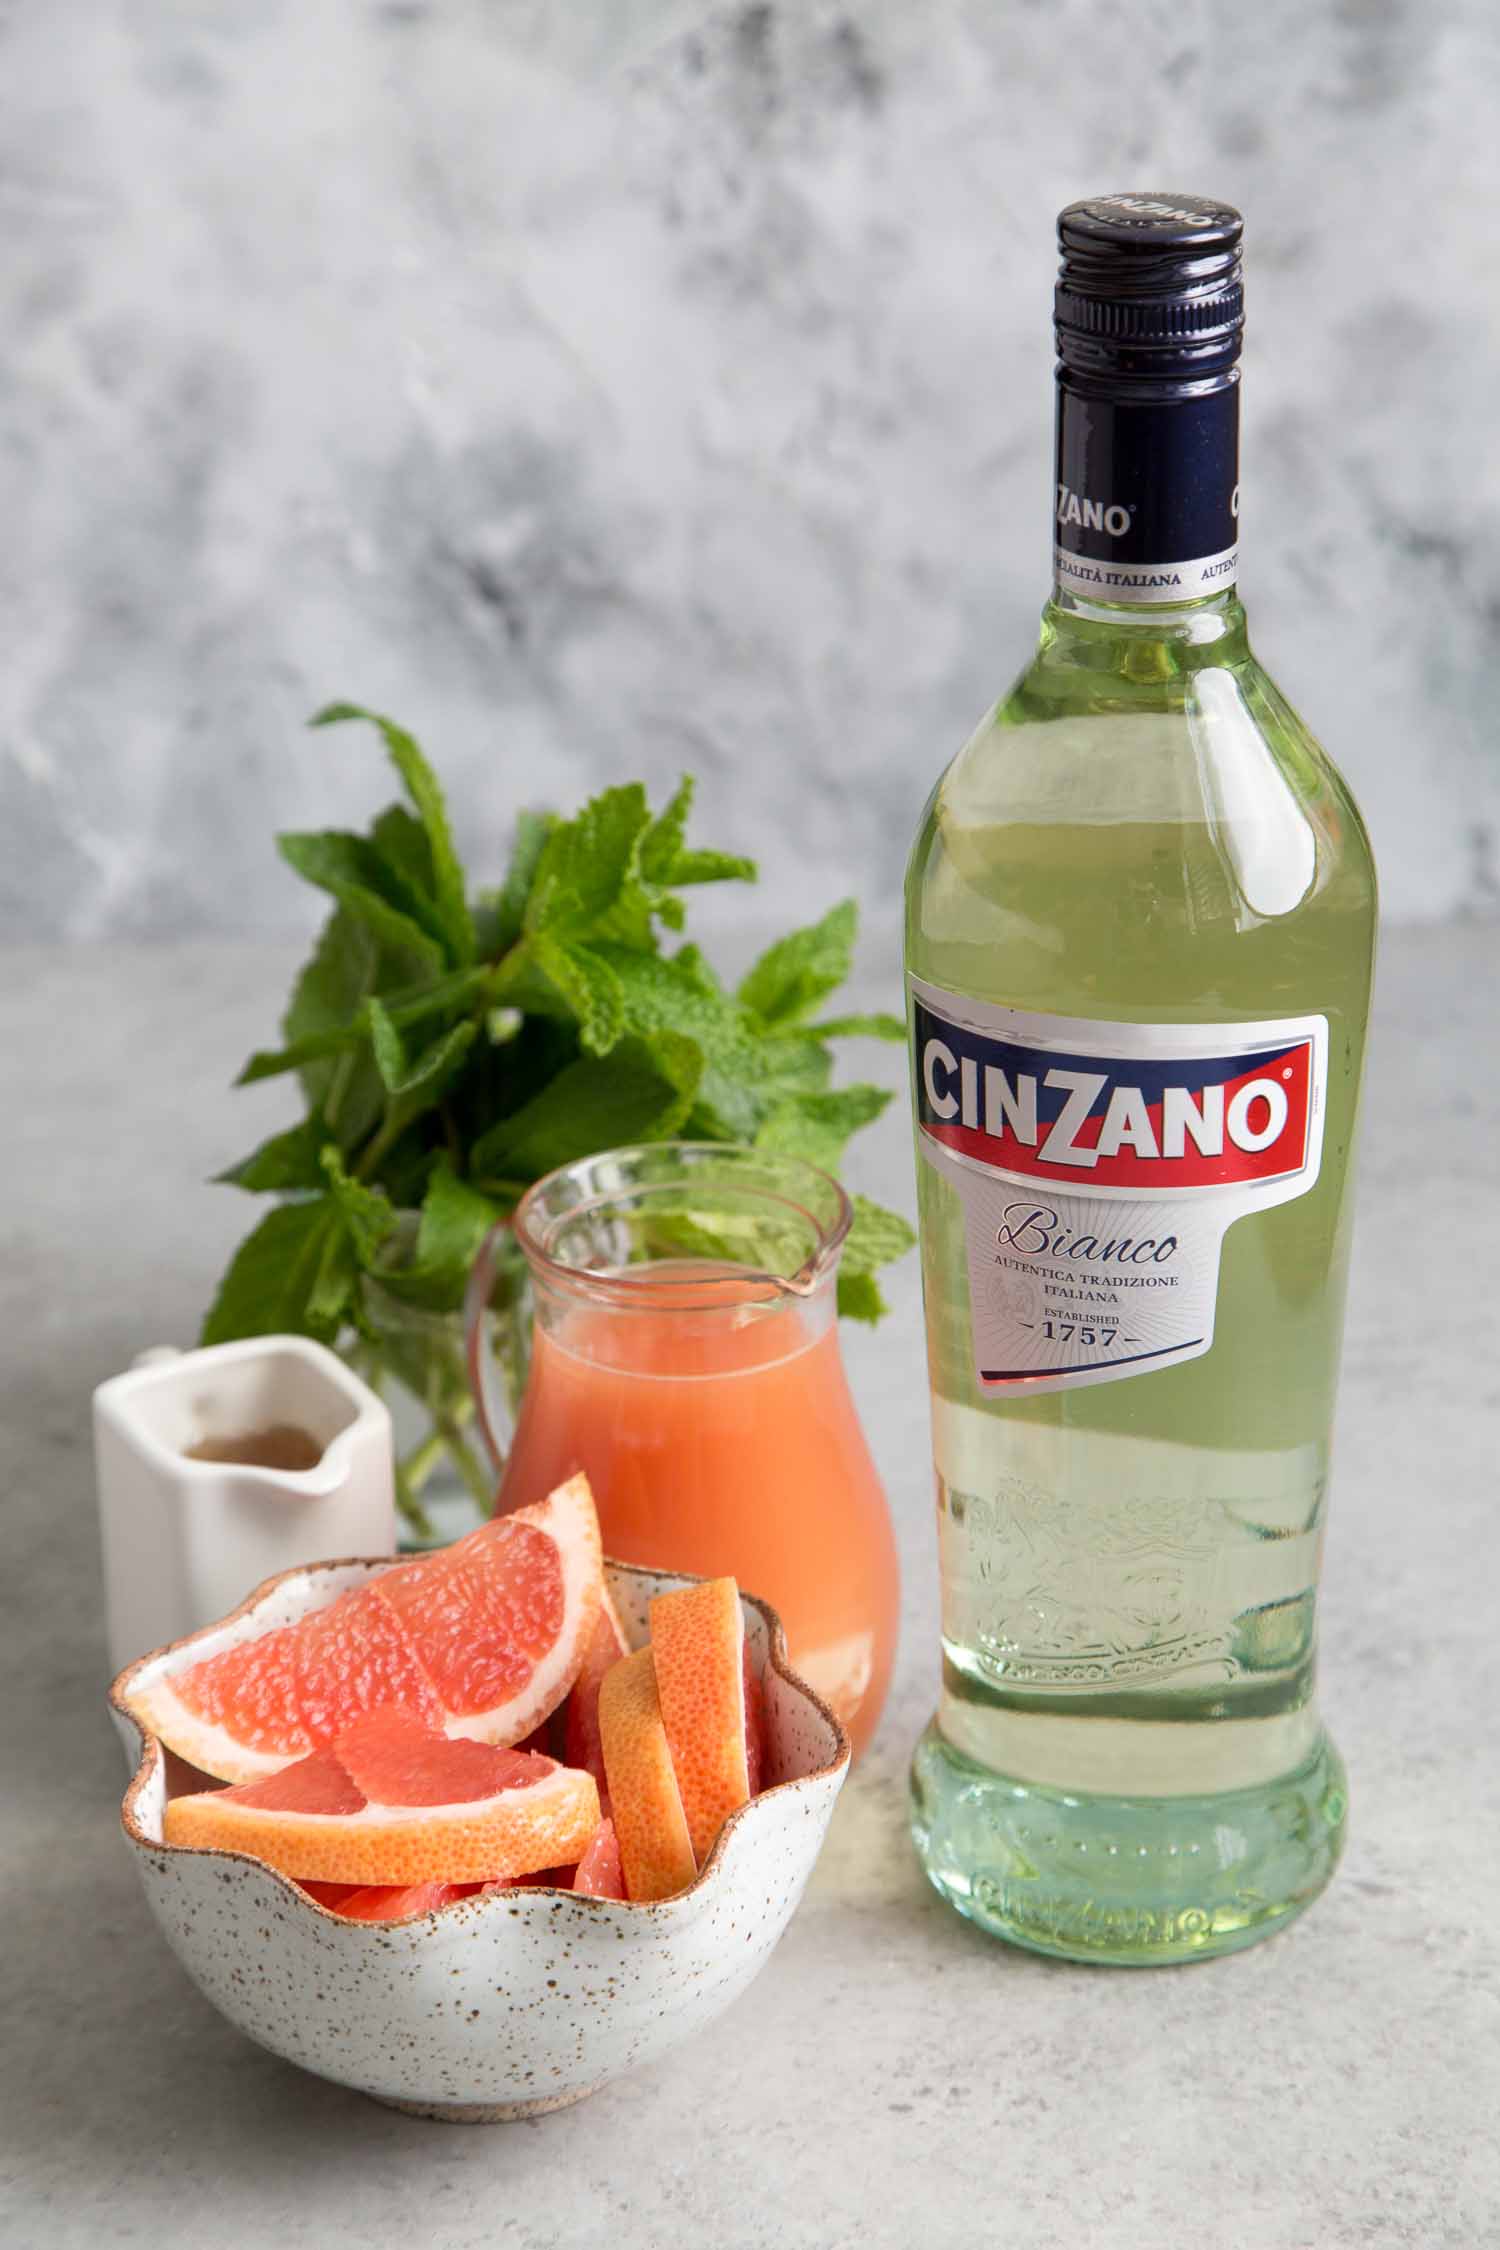 Grapefruit Cinzano